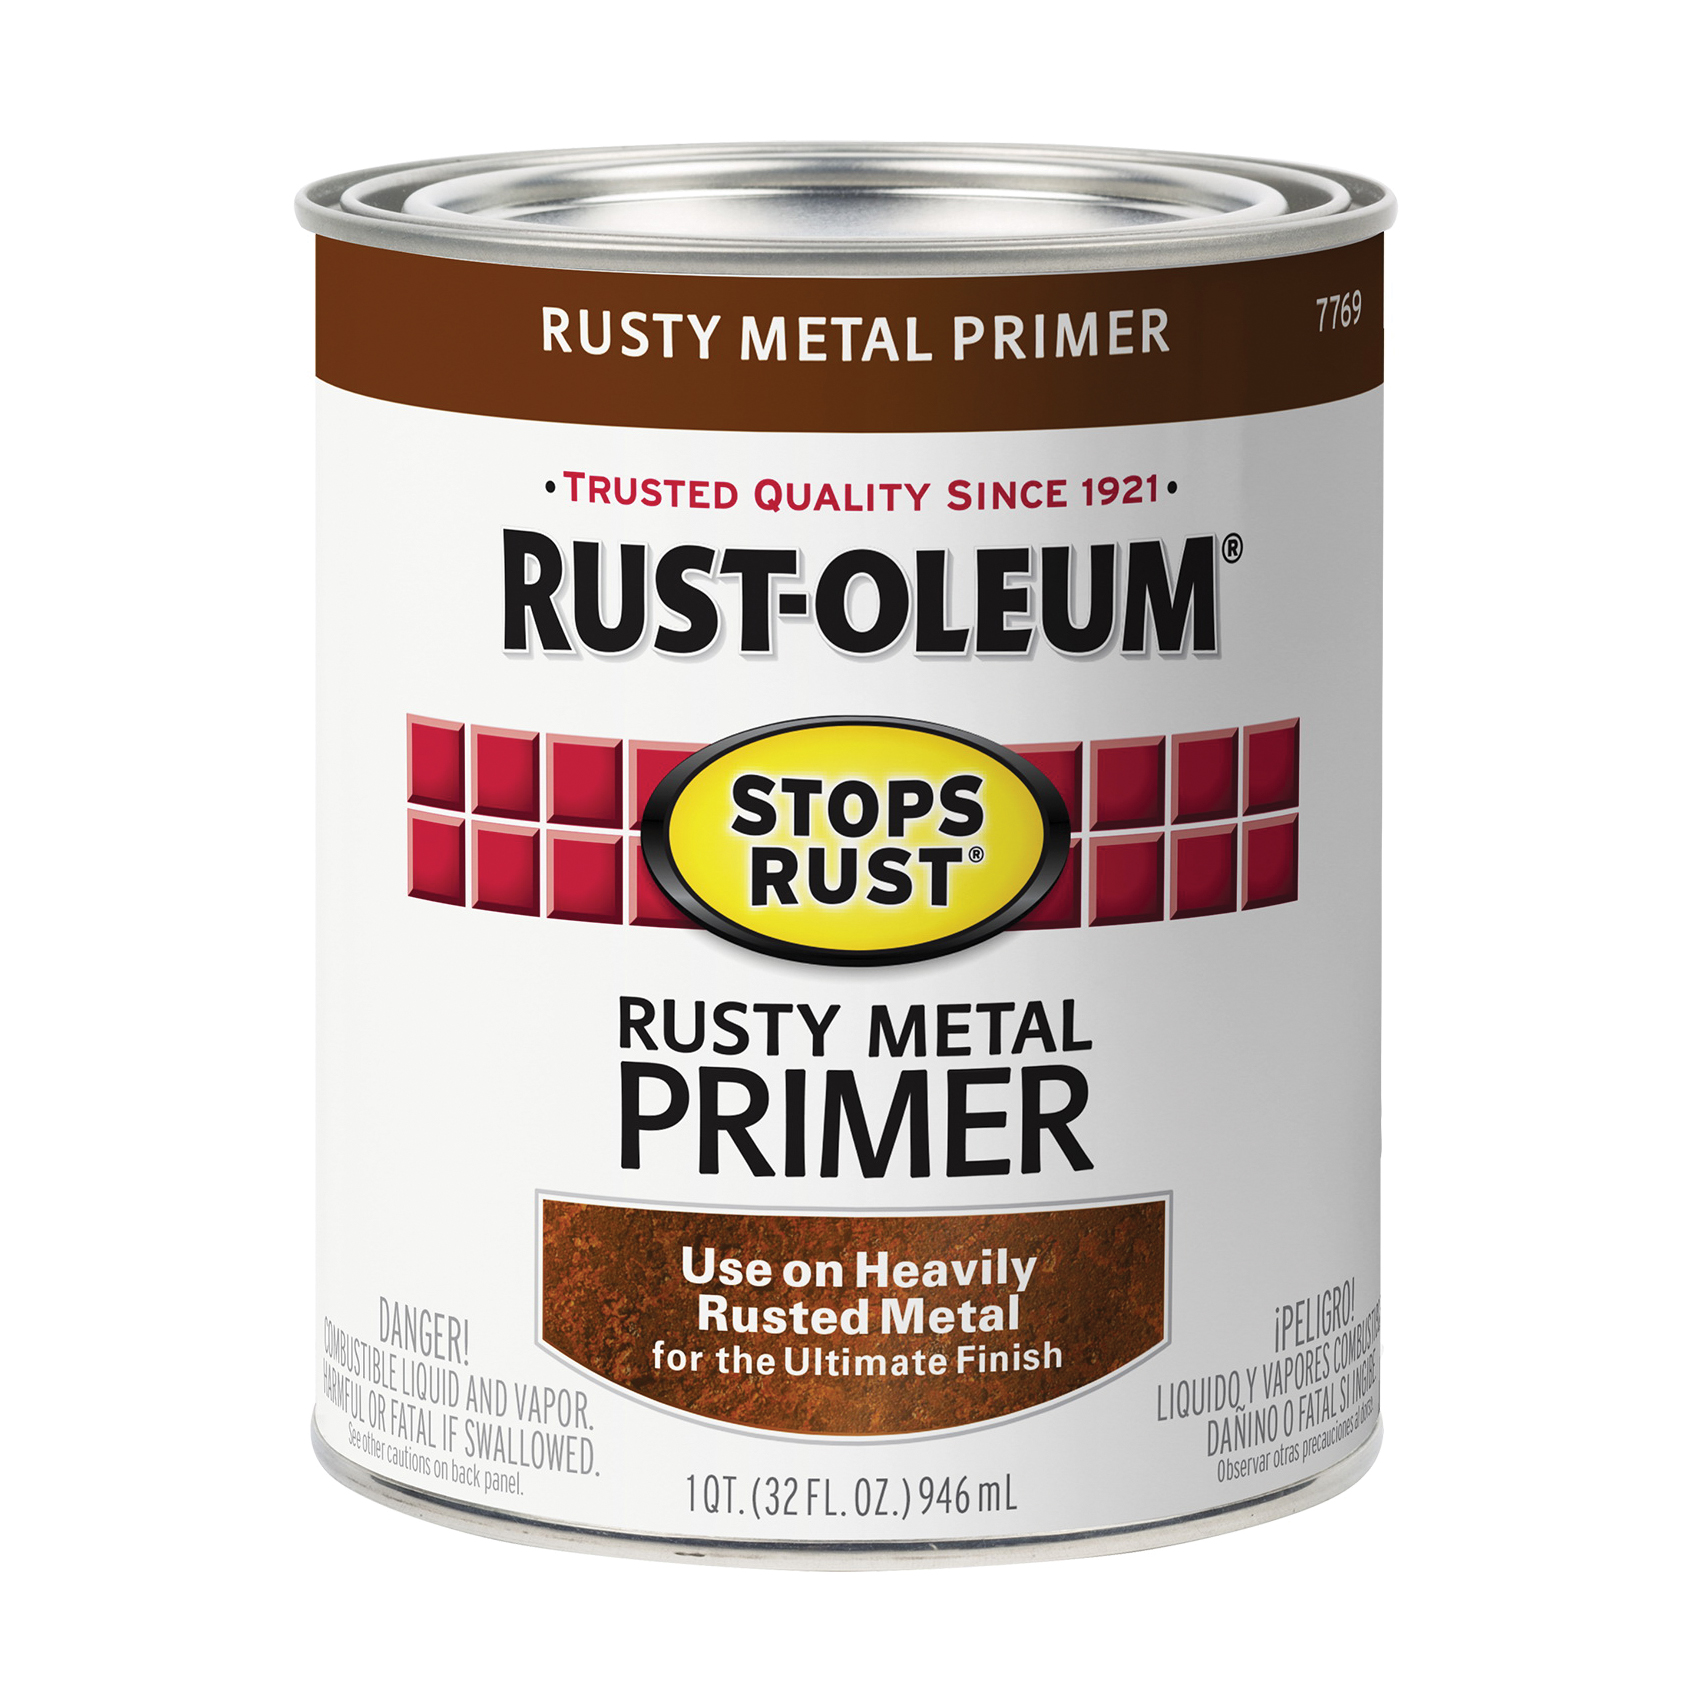 Buy Rust-Oleum Stops Rust 353346 Primer with Turbo Spray System